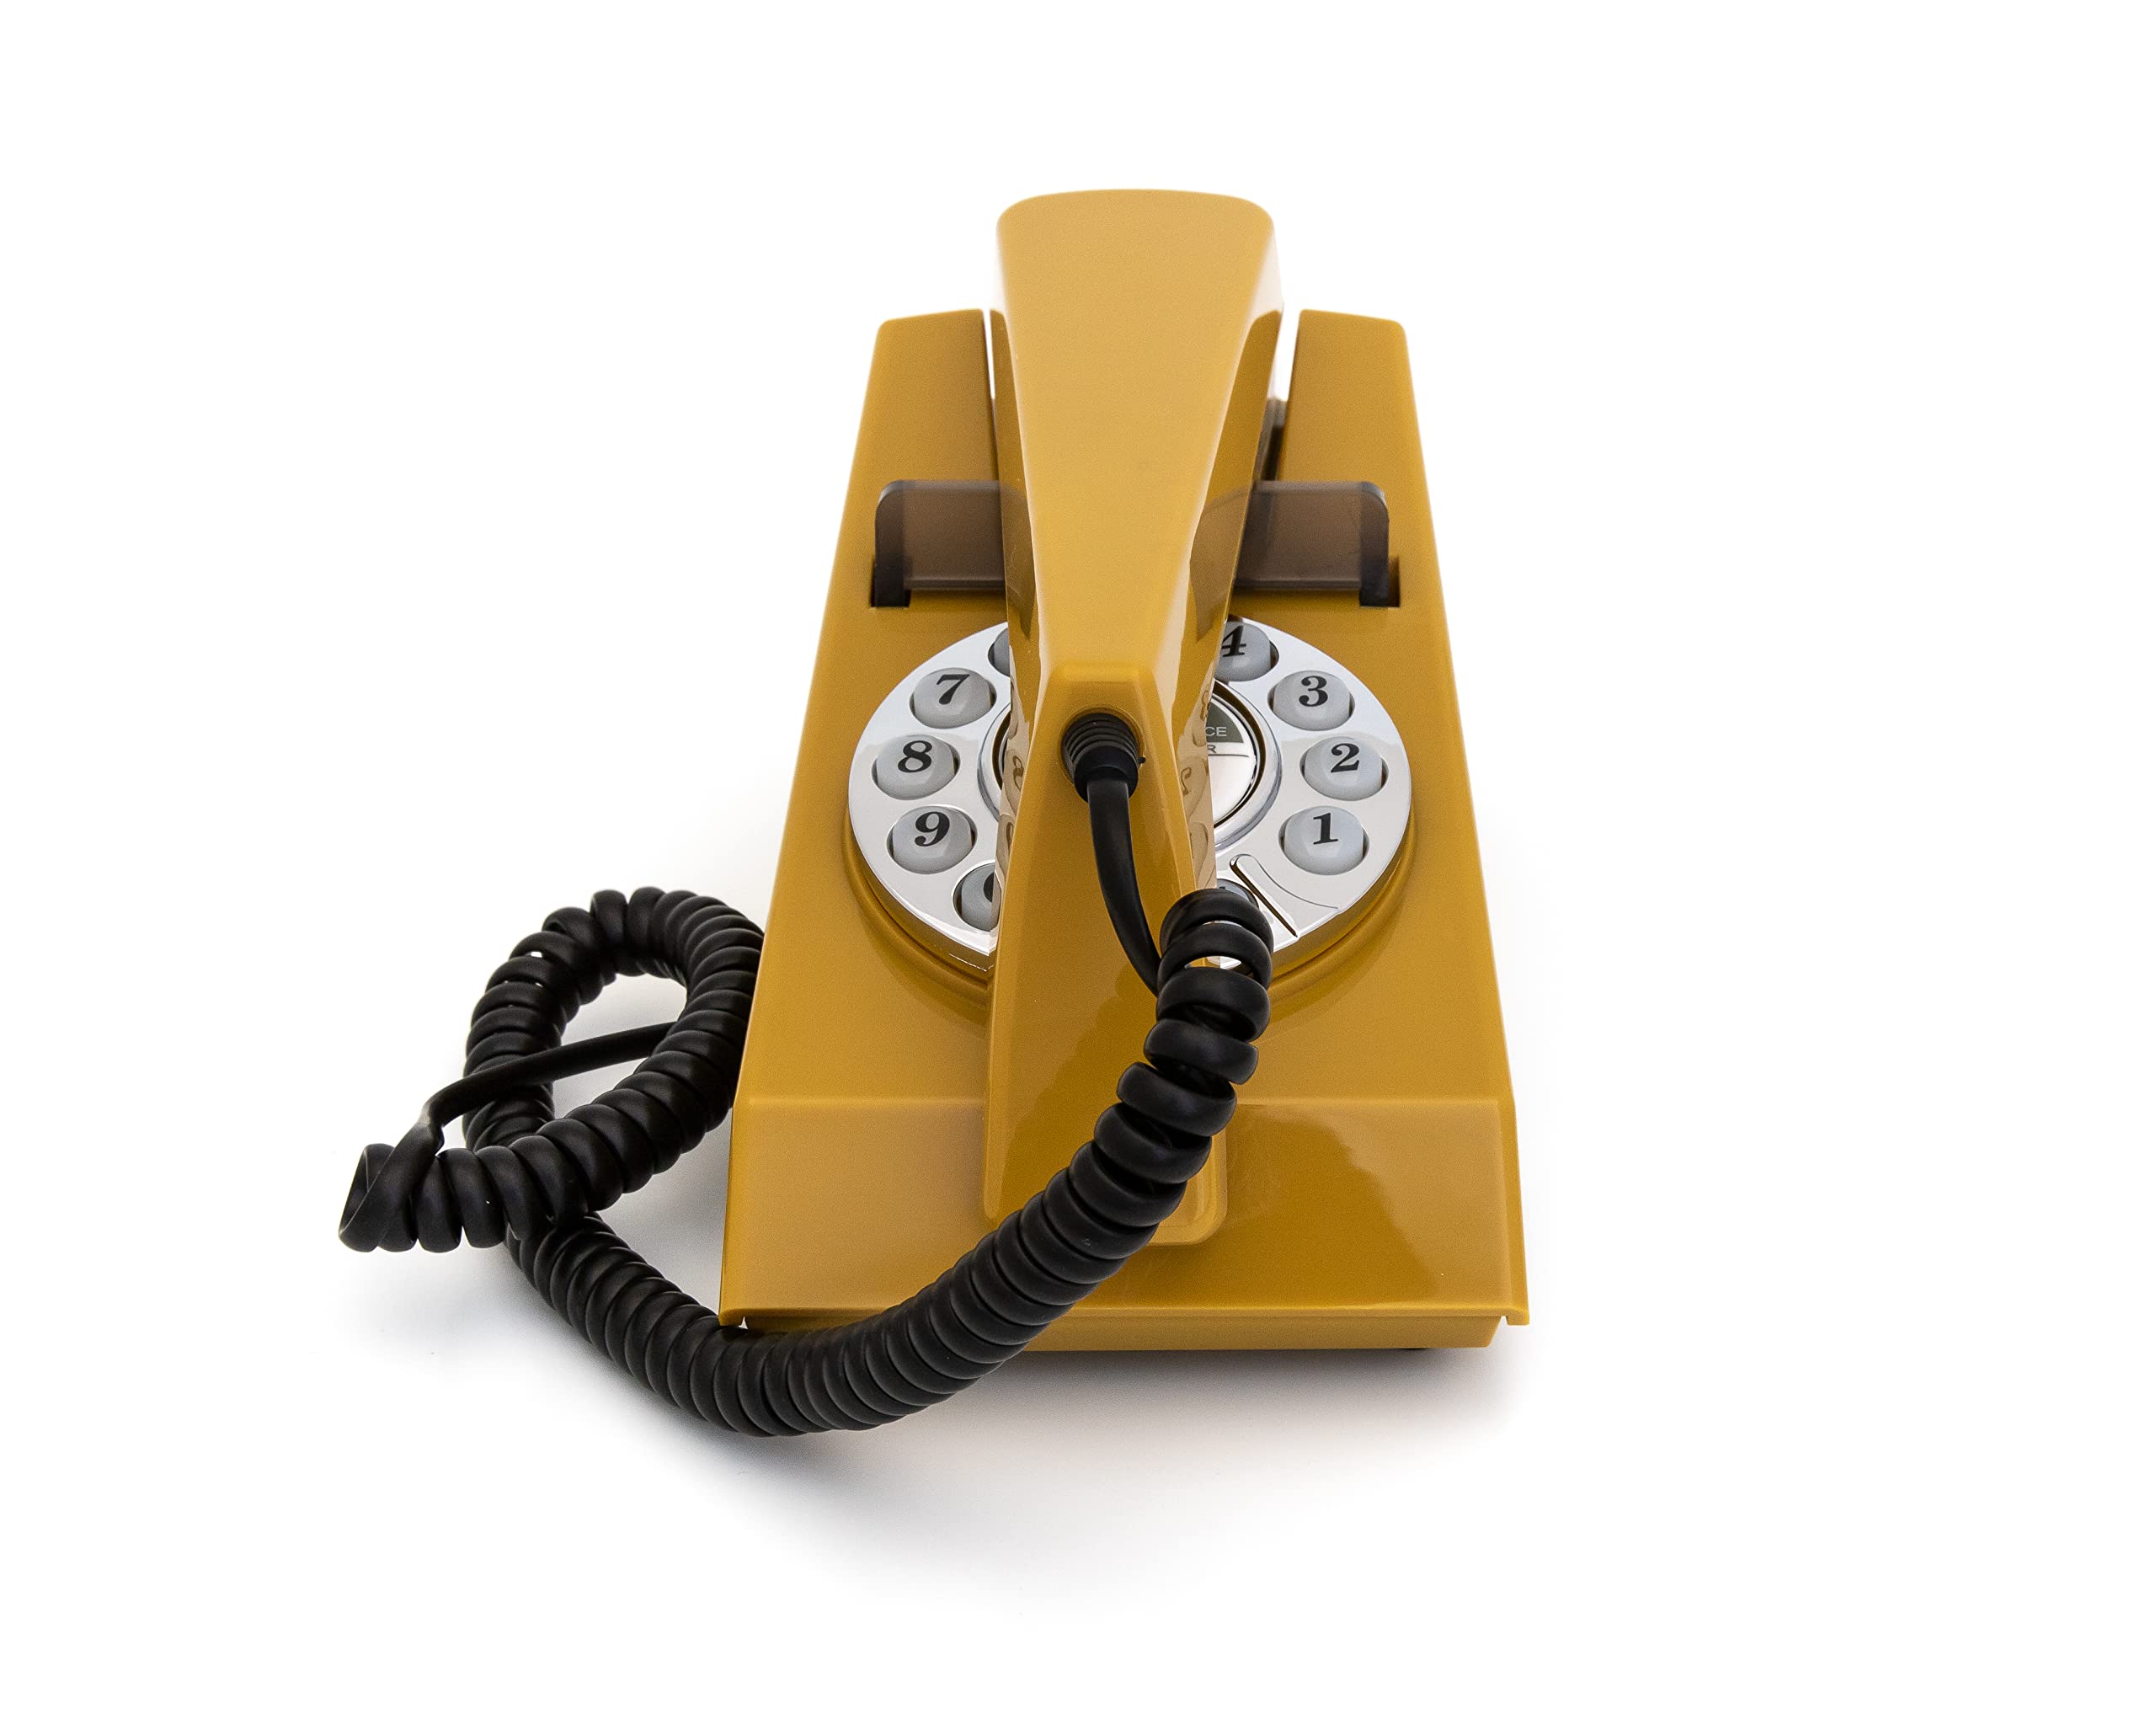 GPO GPOTRMM Trim Telephone Desktop Push-Button Telephone (Mustard)